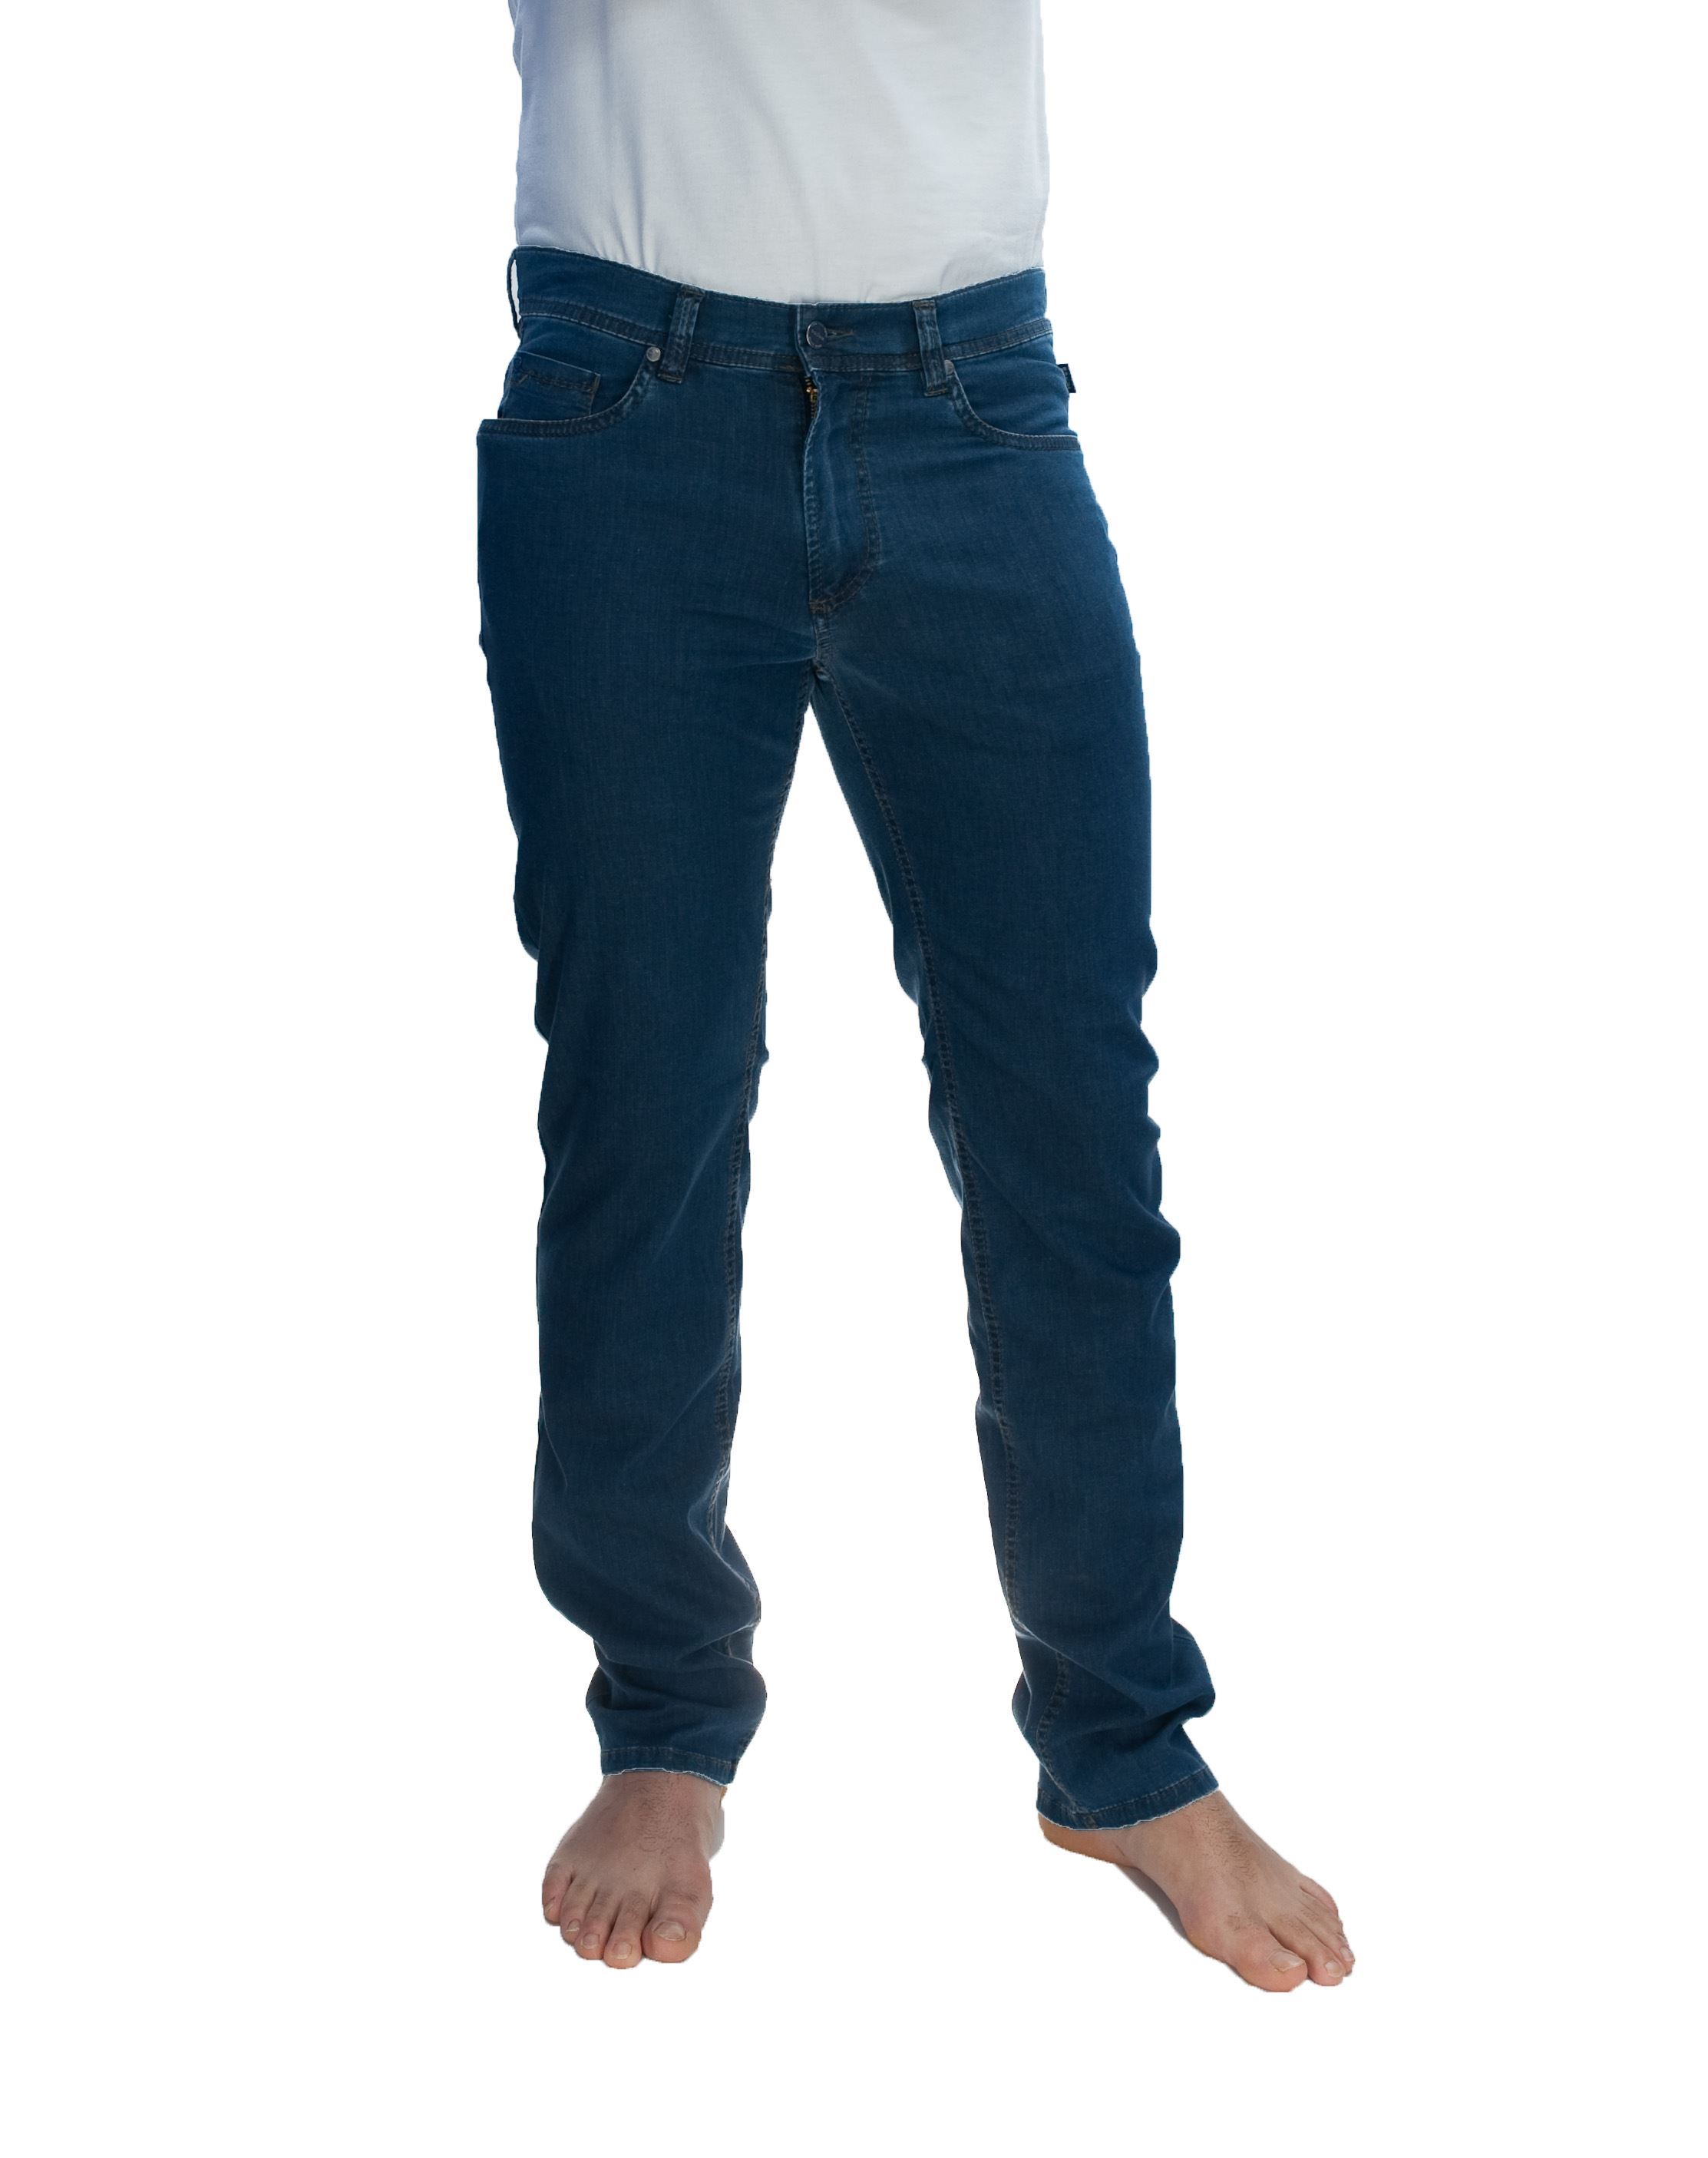 Immagine di Pantalone jeans 5 tasche scuro